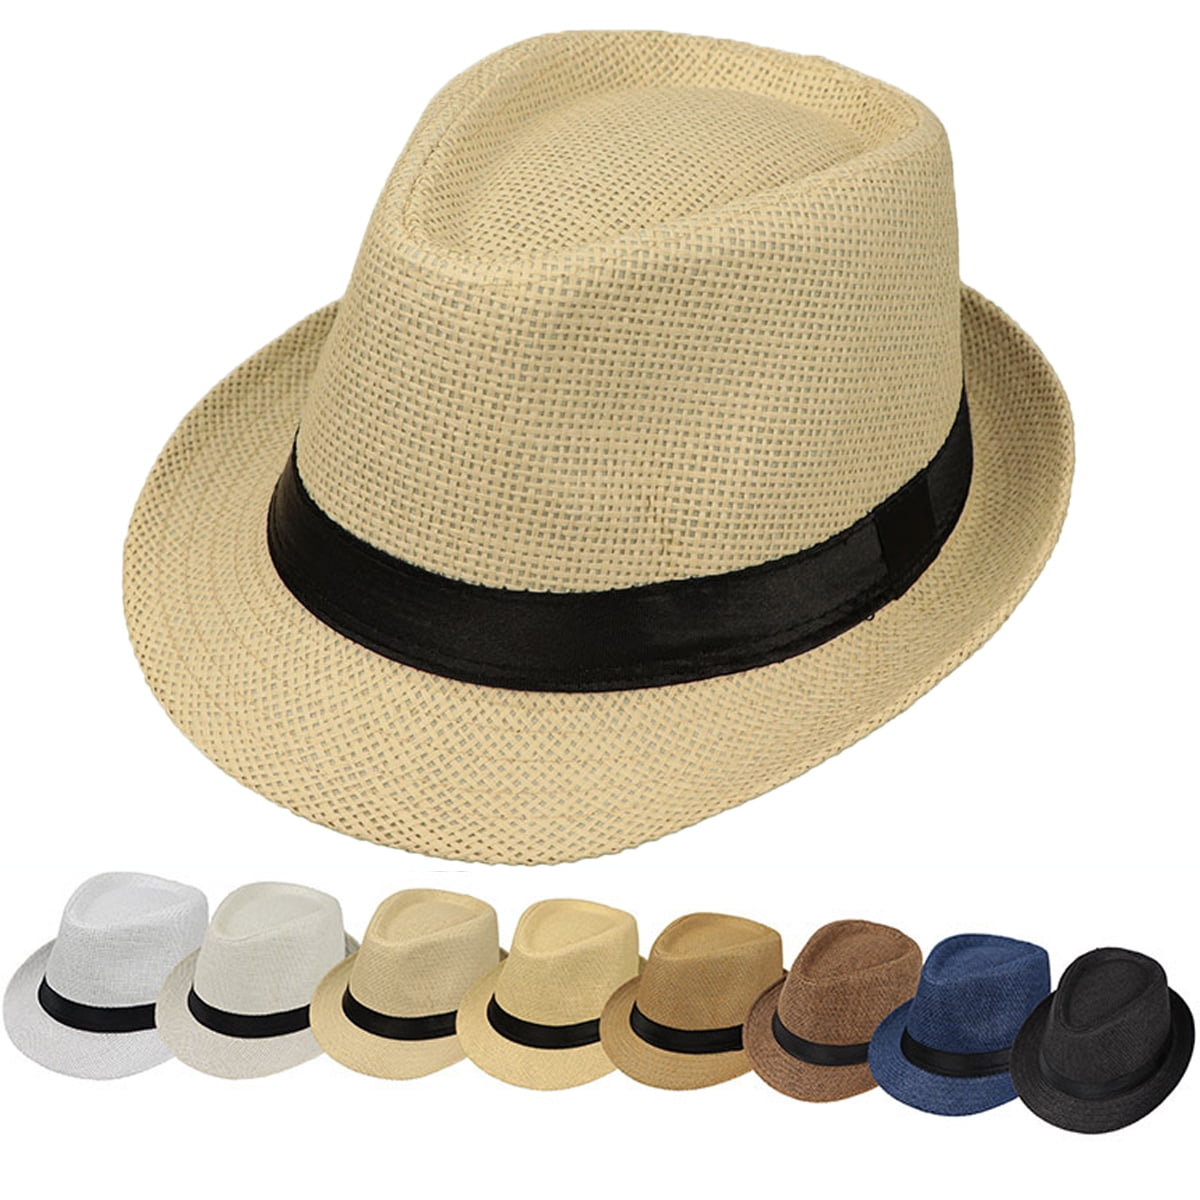 Men Woman's Sun Hats Straw Summer Cap Casual Hat Adults Outdoor Beach hat